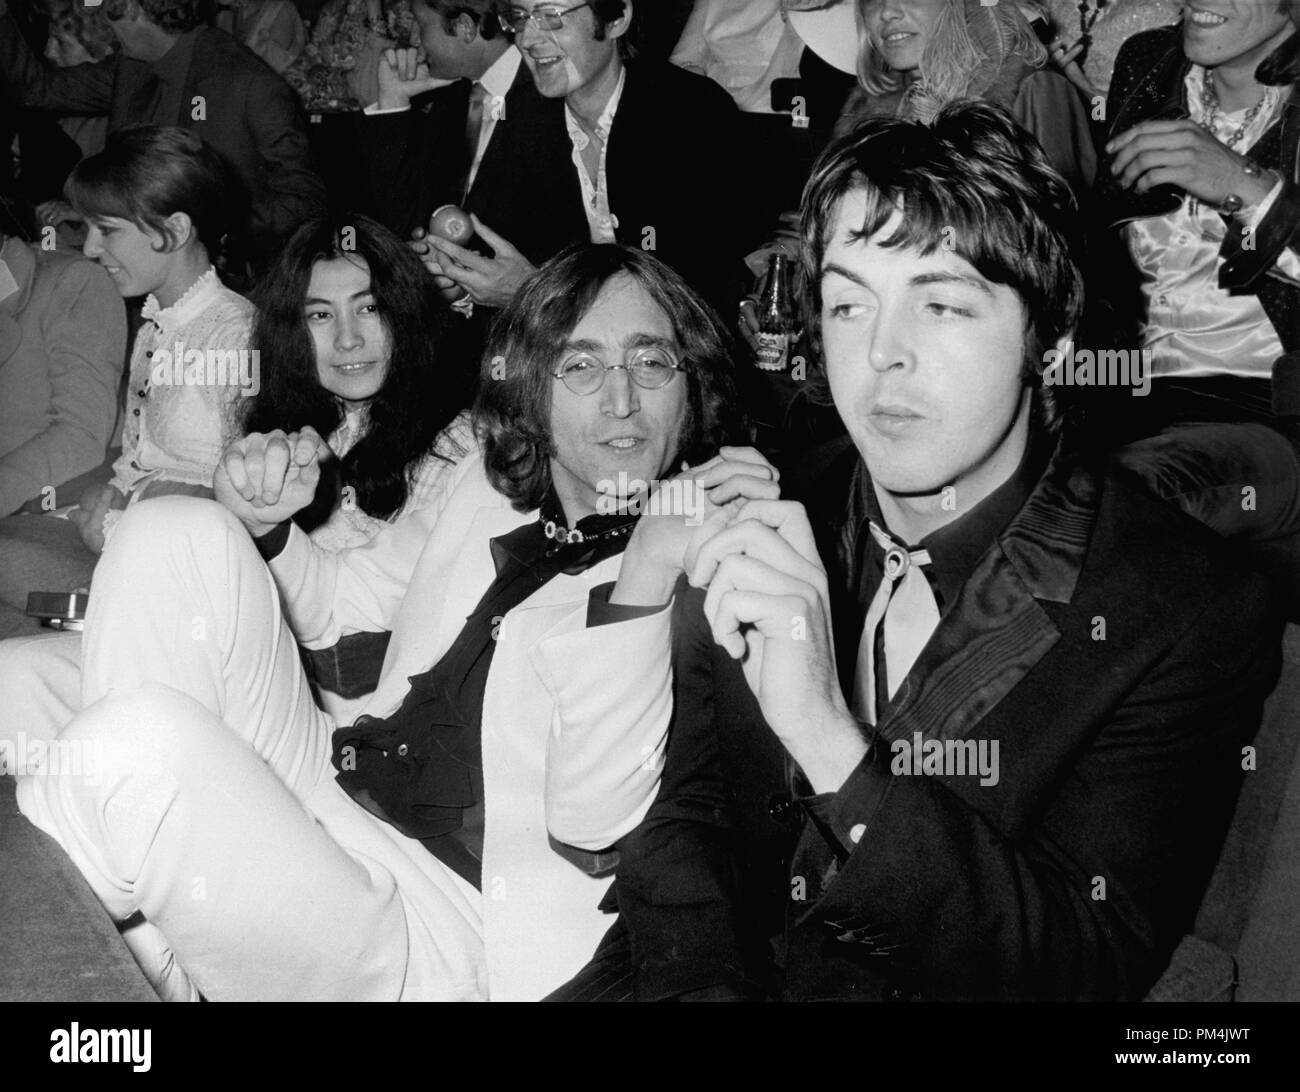 Beatles Paul McCartney, John Lennon, John's Frau Yoko Ono, Juli 1968. Datei Referenz Nr. 1013 072 THA © GFS/Hollywood Archiv - Alle Rechte vorbehalten. Stockfoto